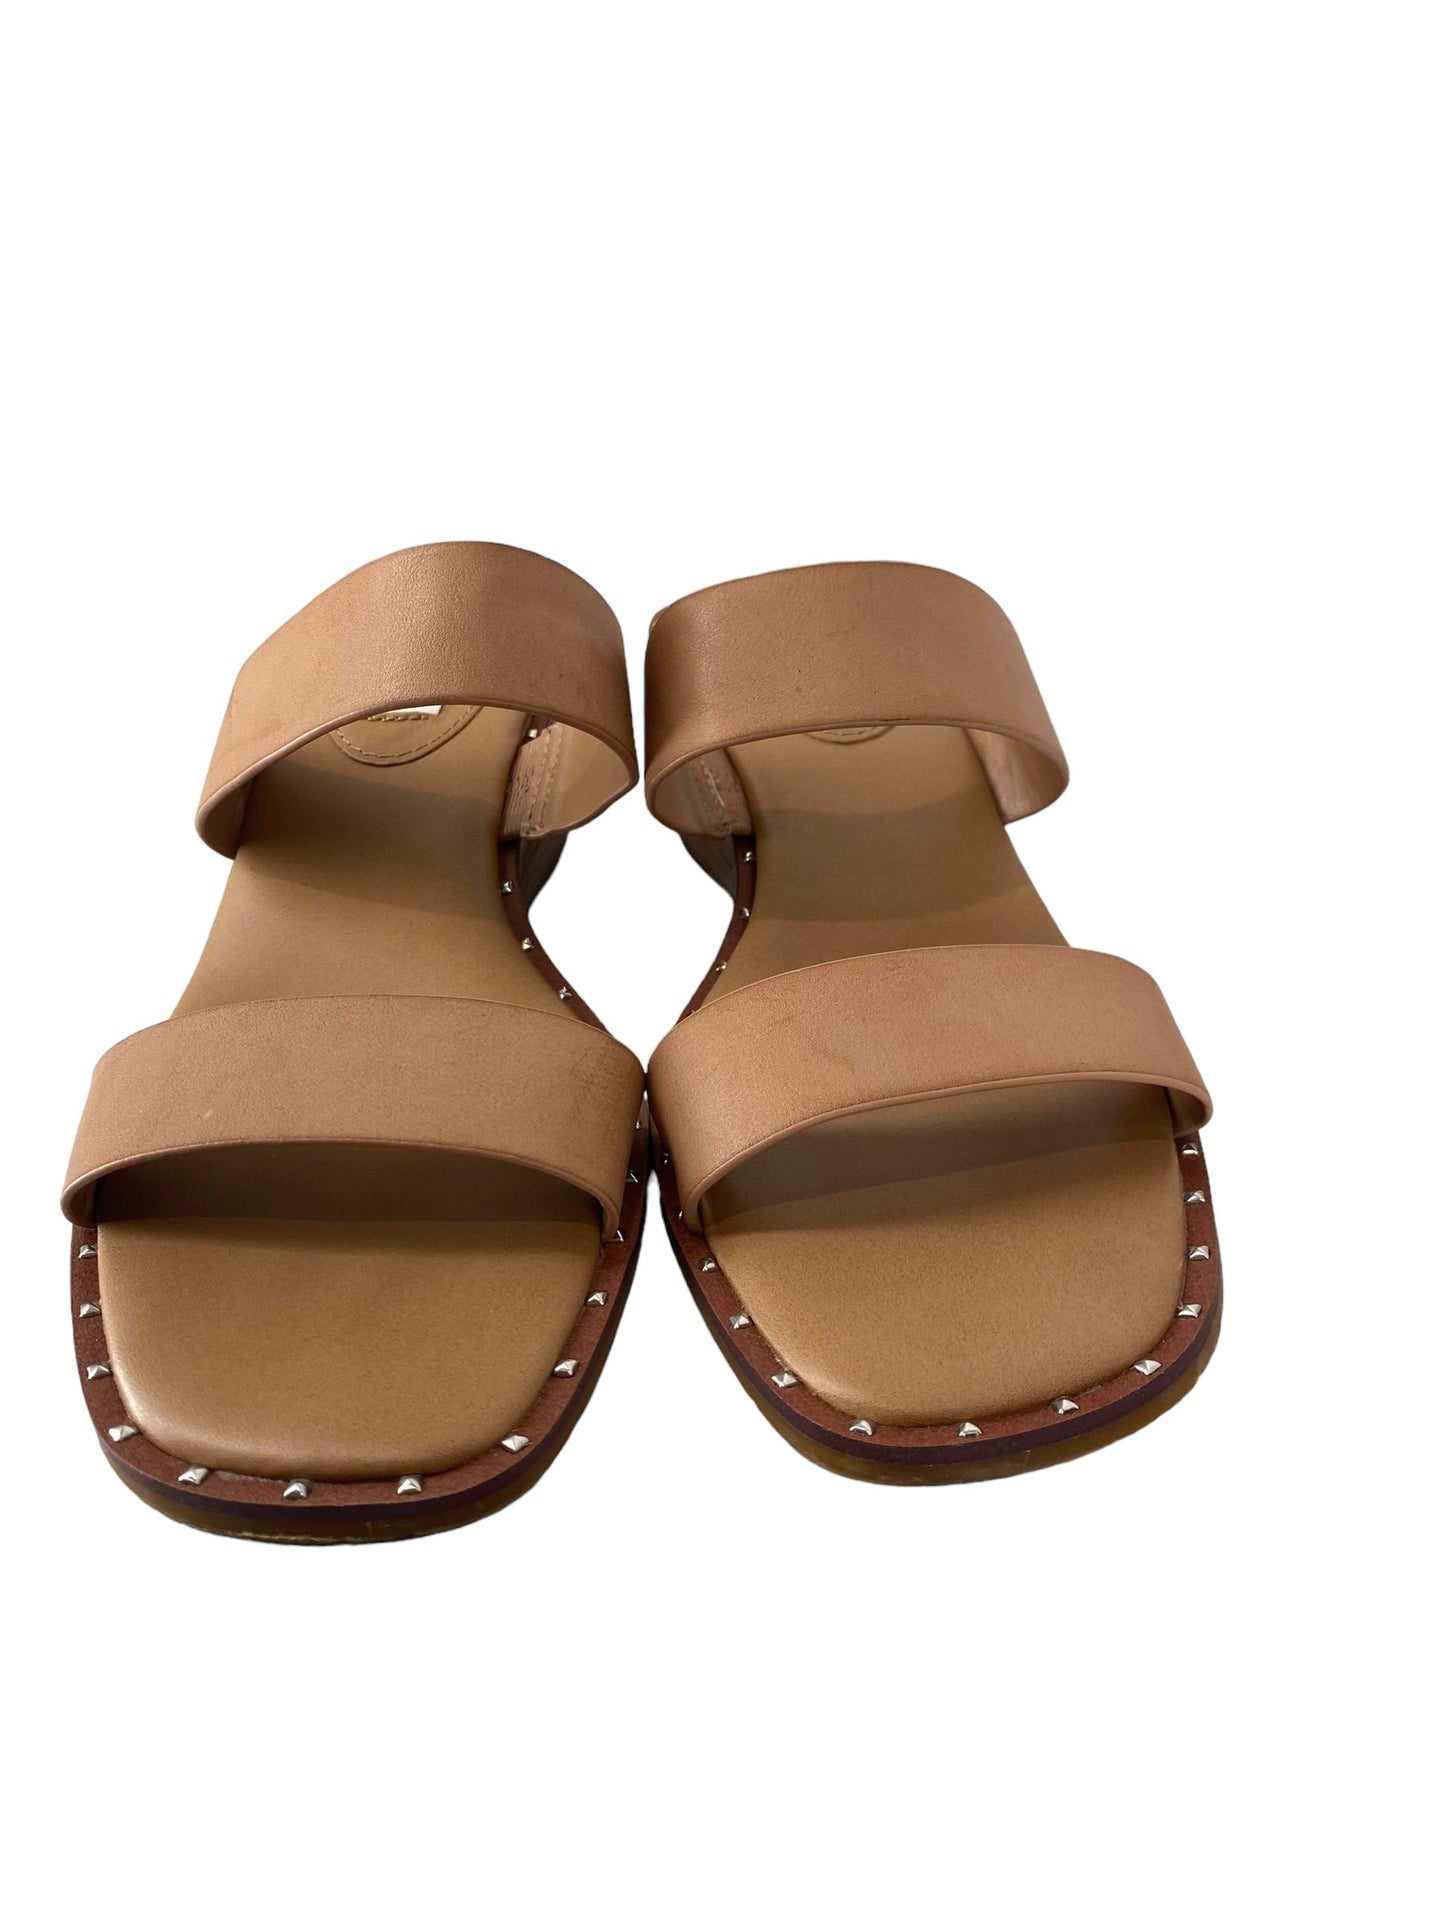 Brown Sandals Heels Wedge Steve Madden, Size 8